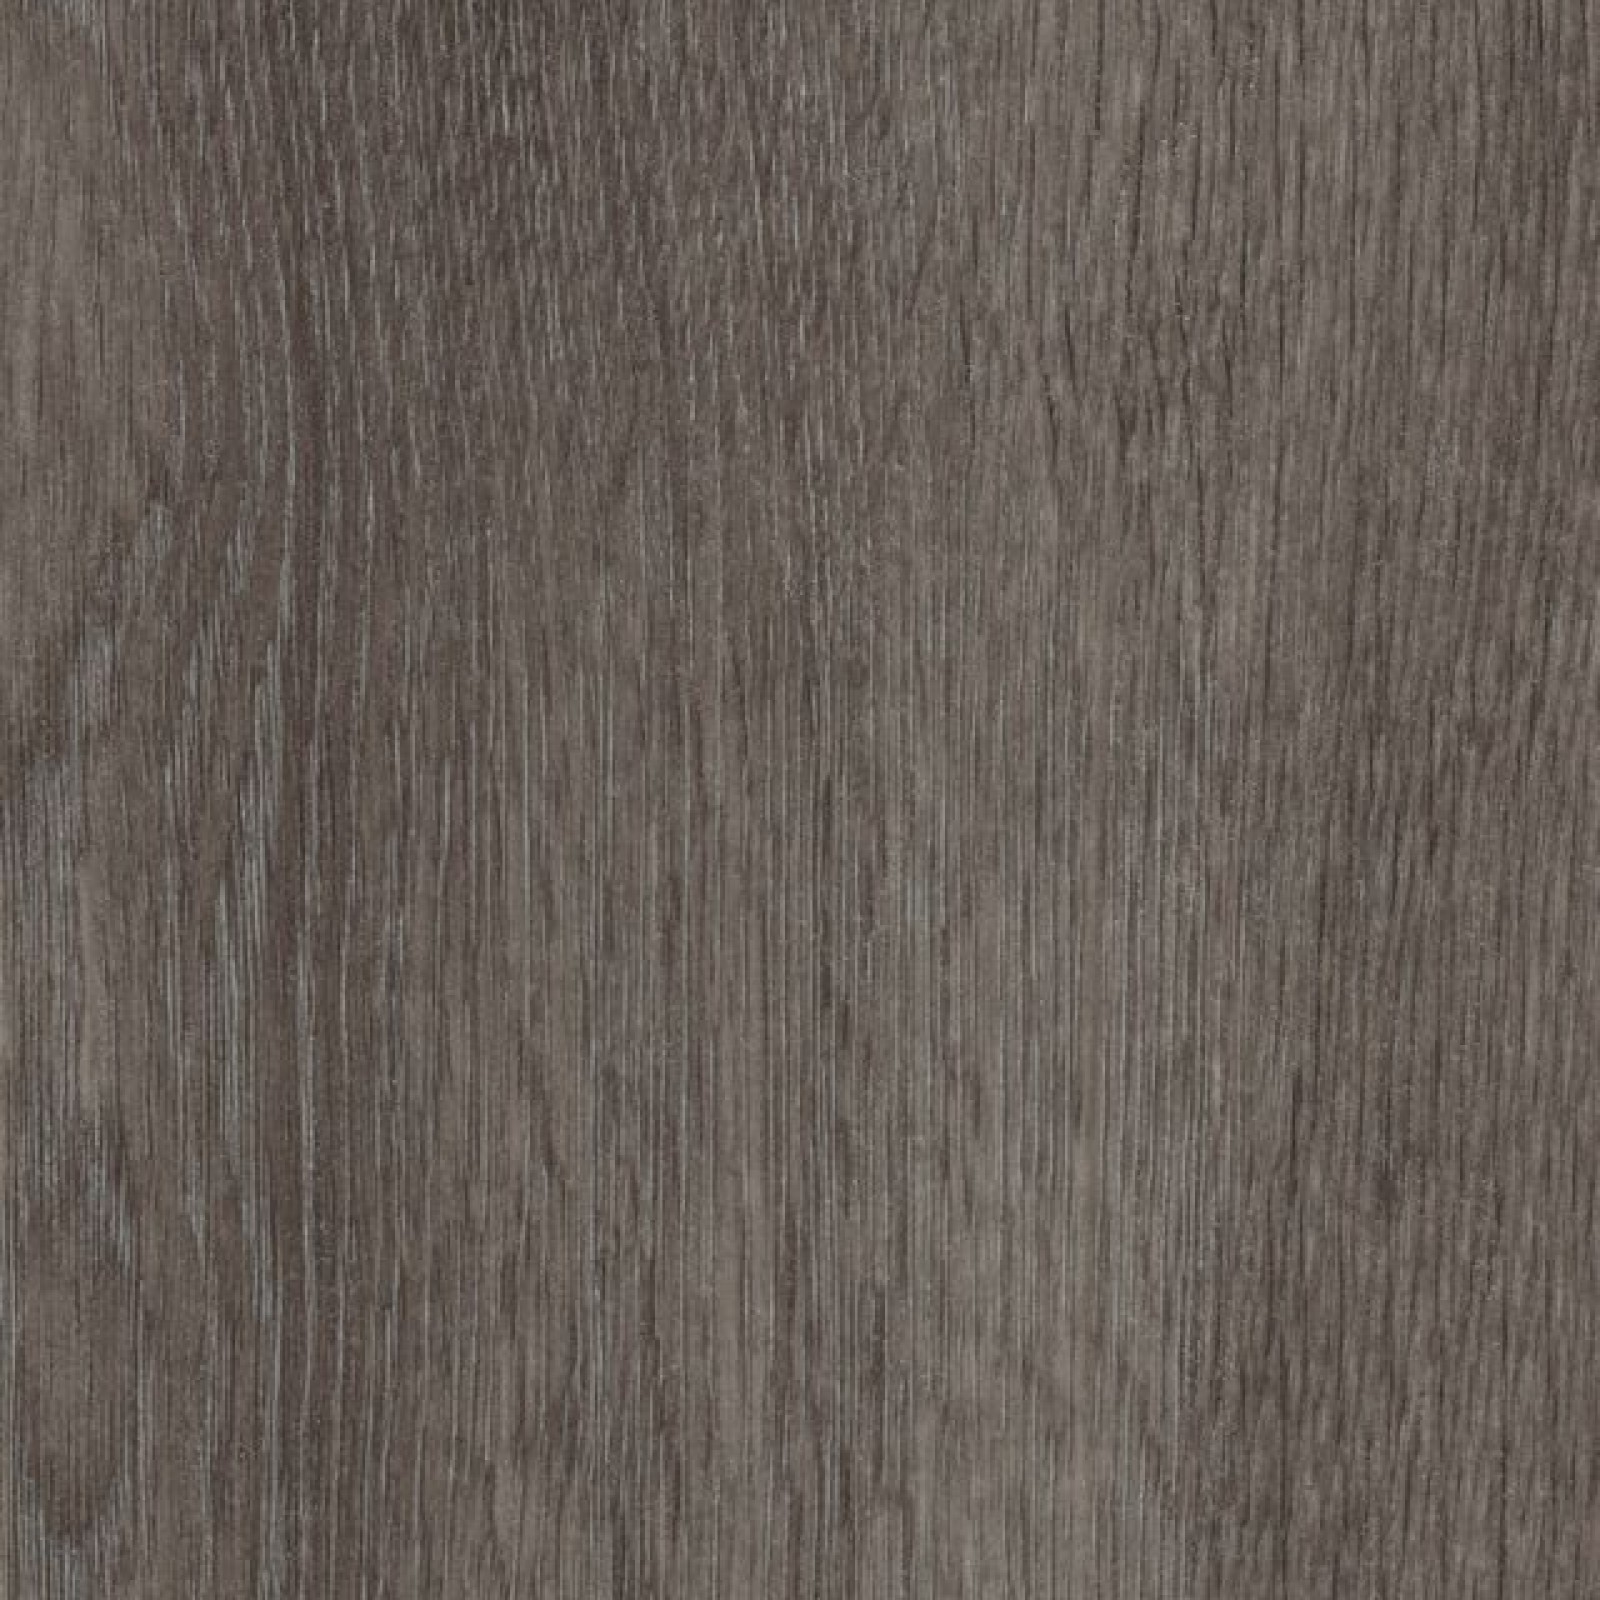 Vzor - 60375FL1 grey collage oak